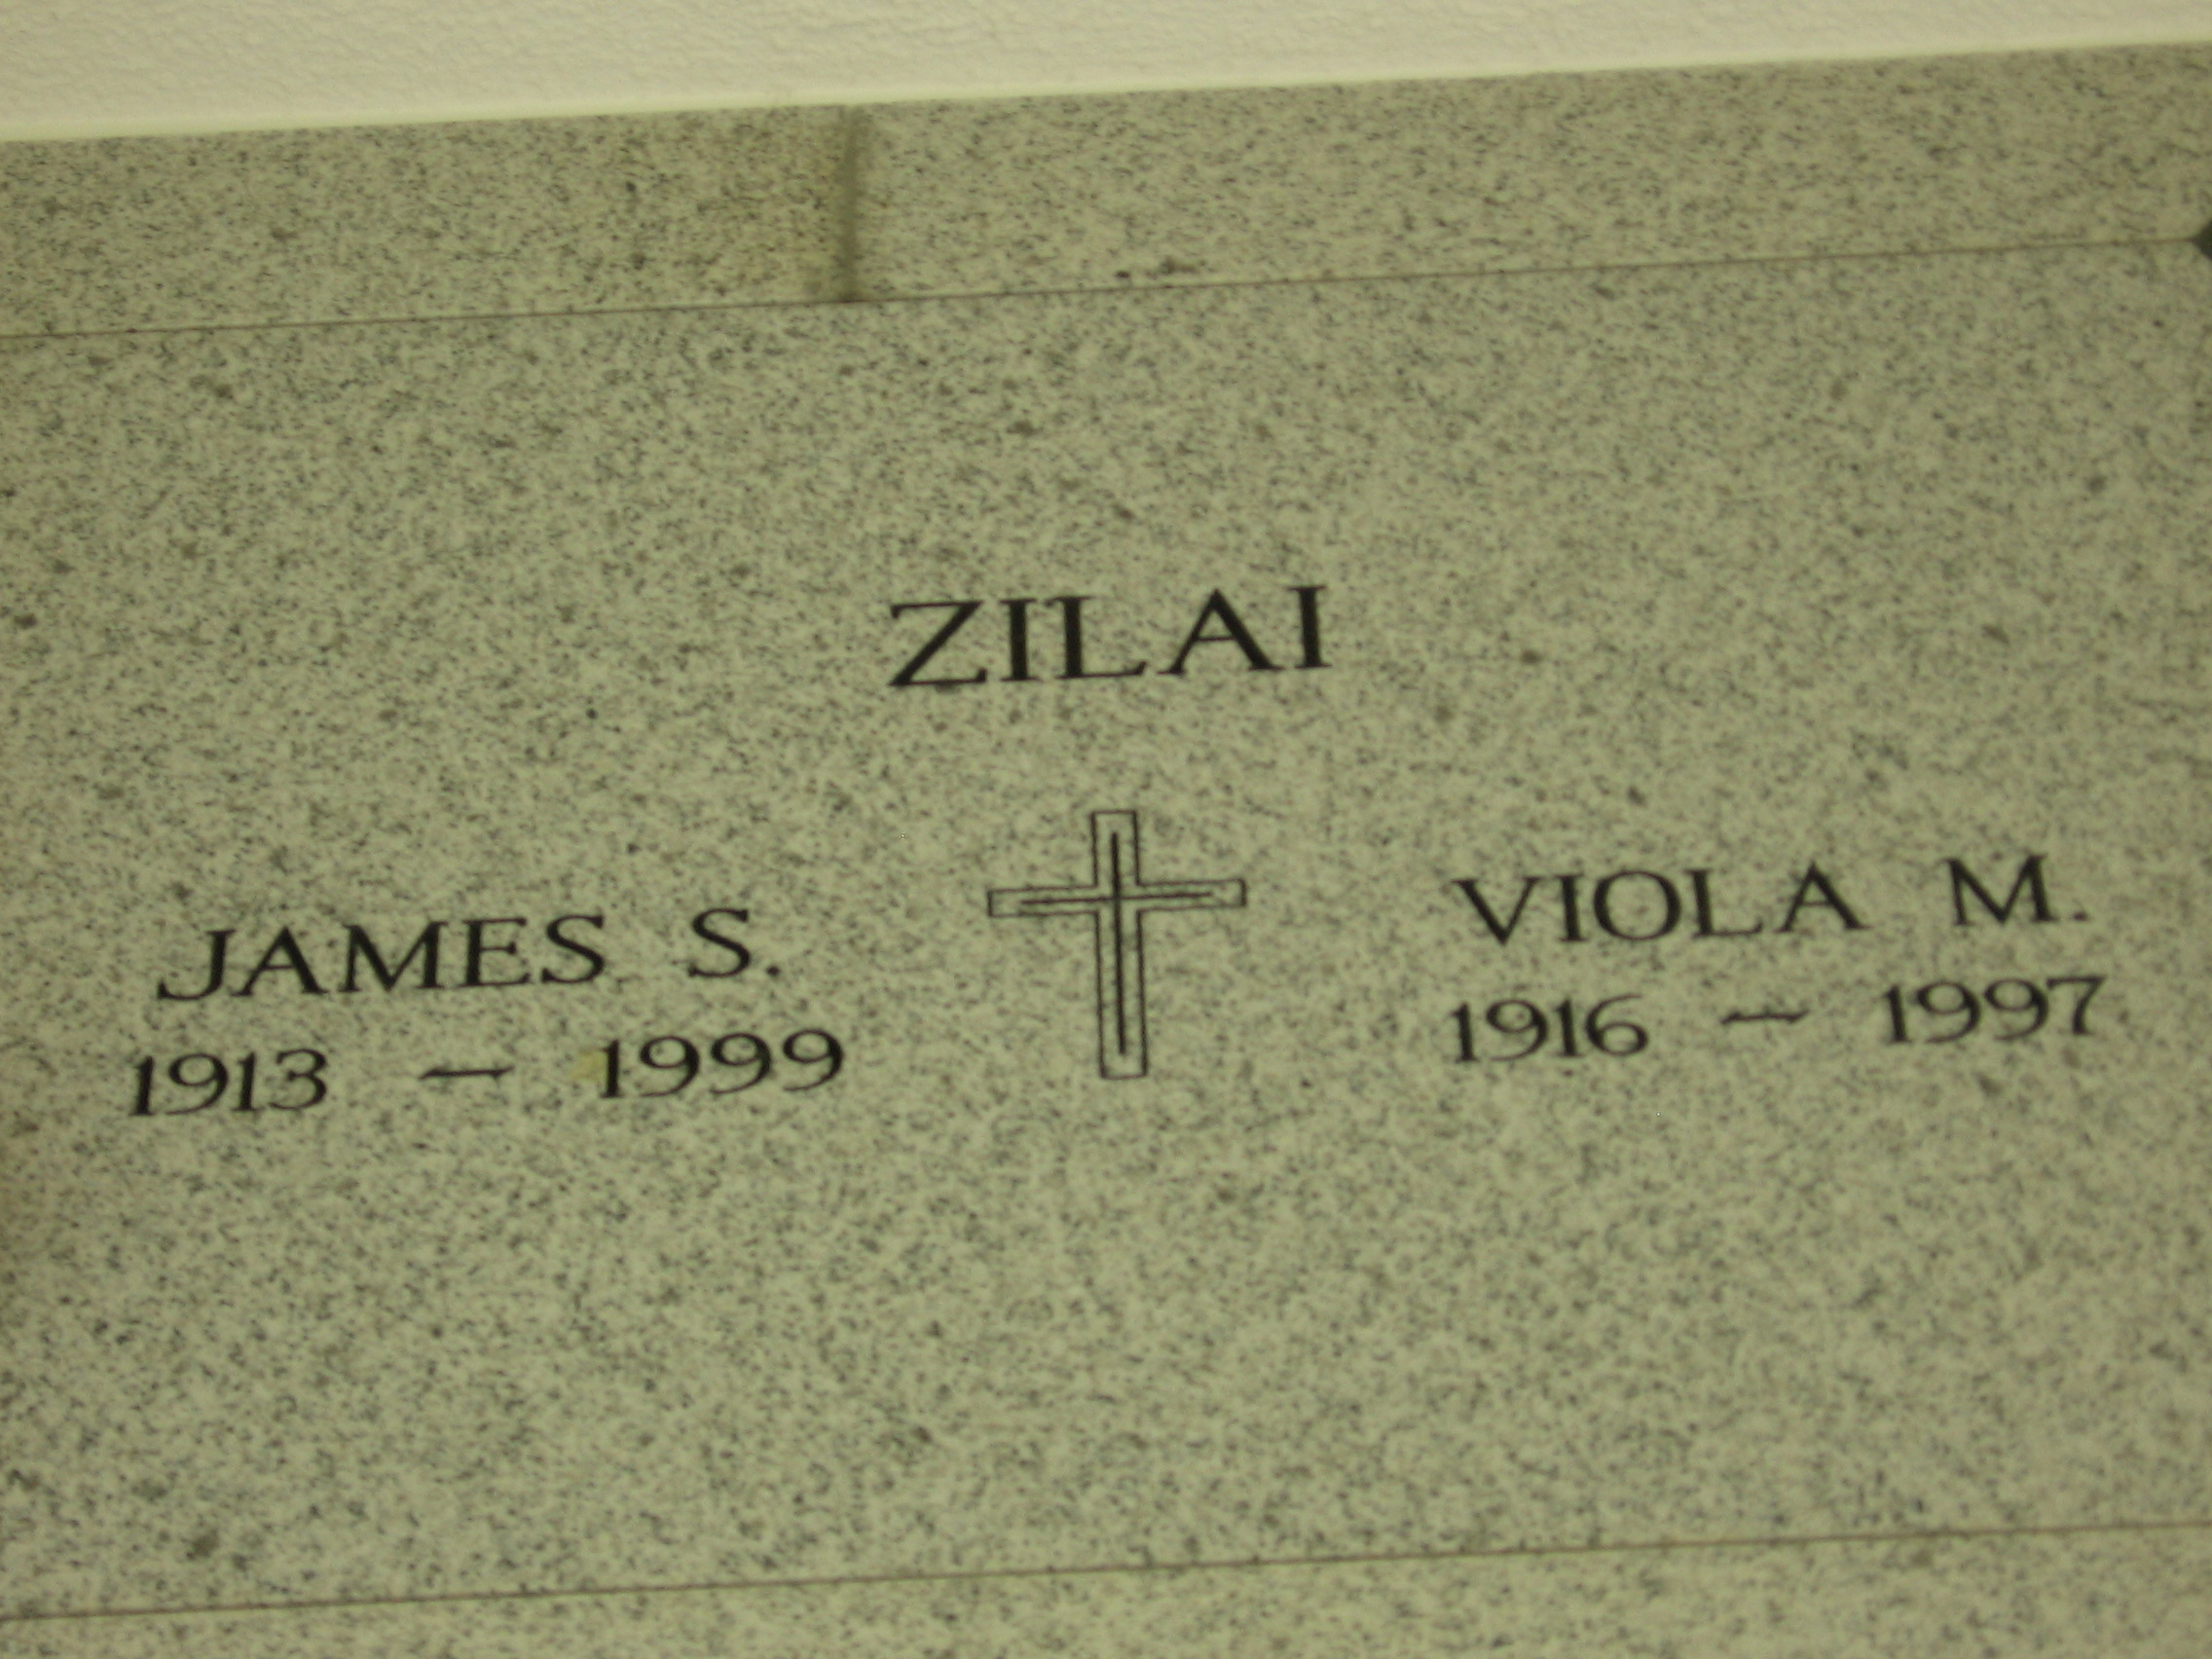 Viola M Zilai